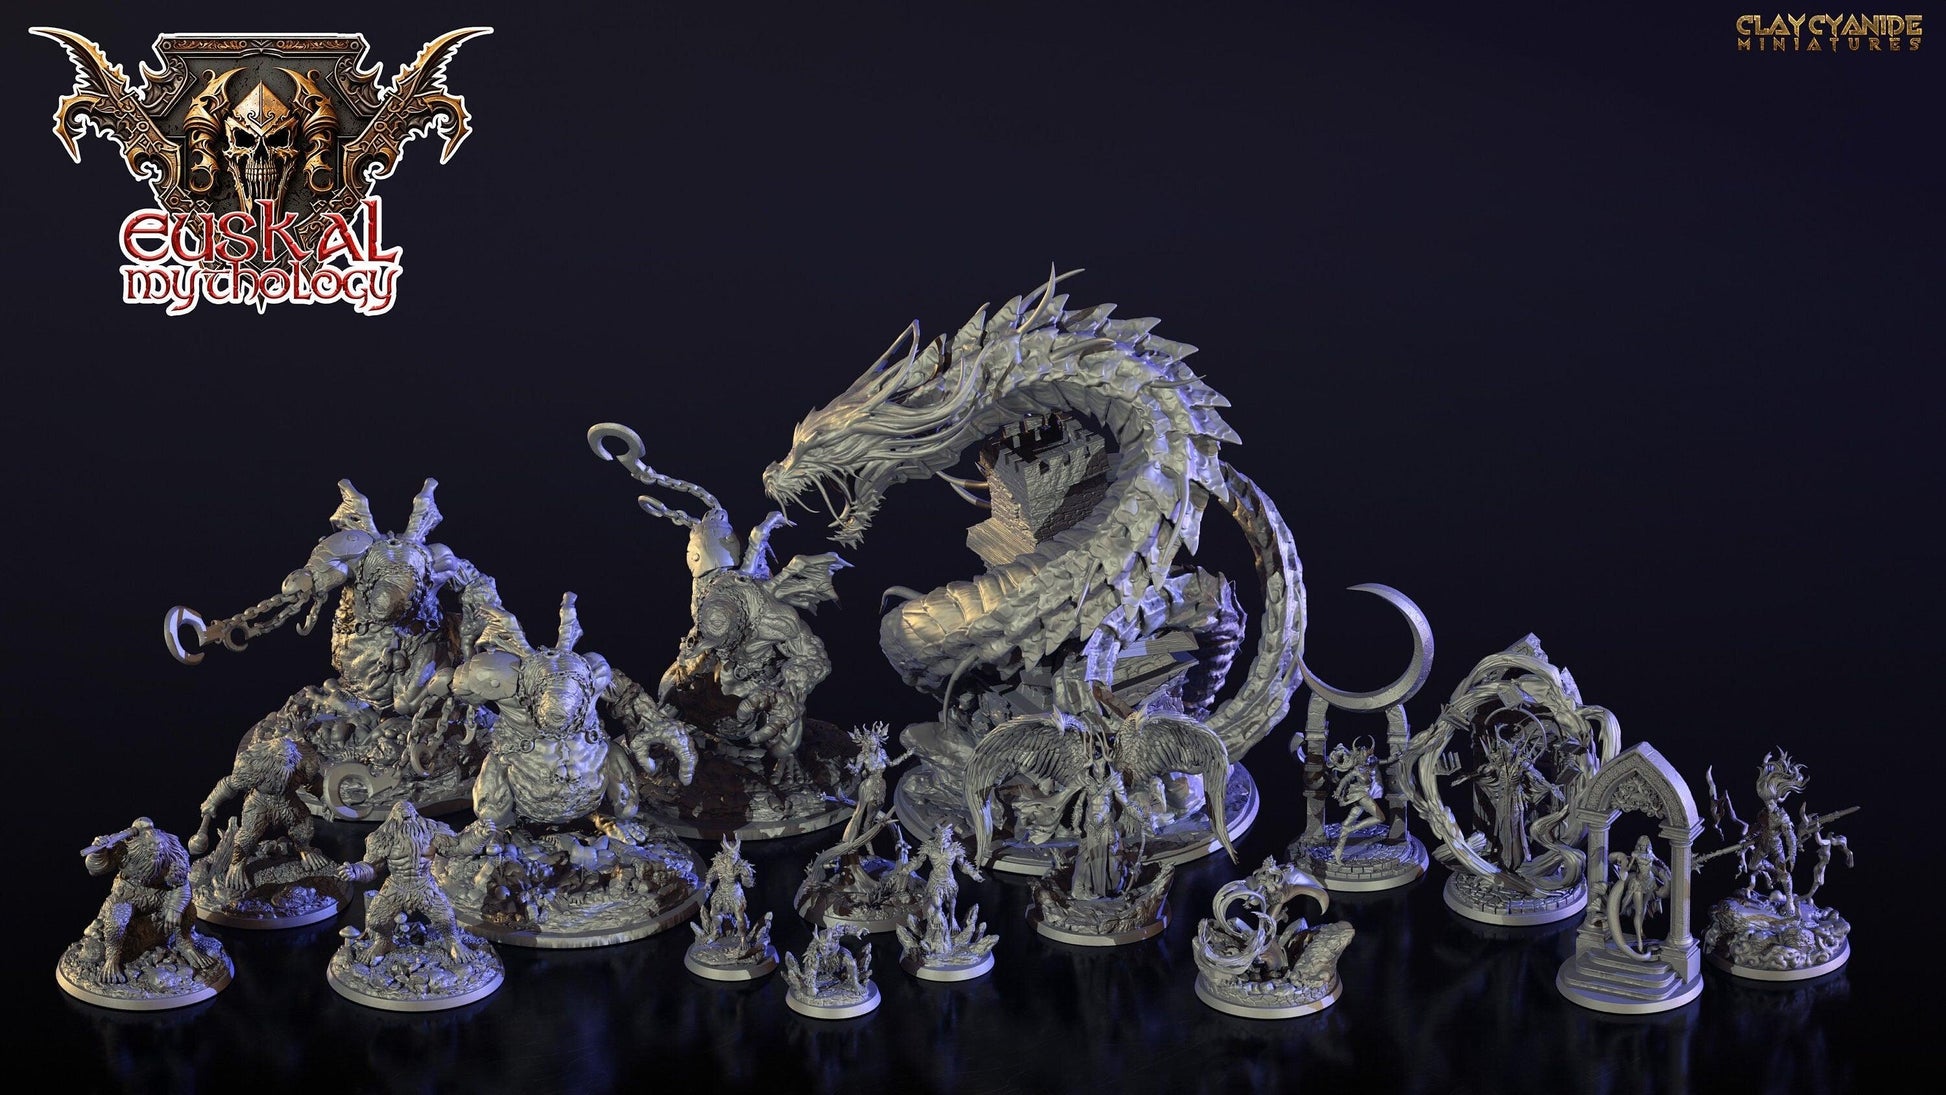 Storm Dragon Miniature | Sugaar Basque Mythology Euskal | DnD Miniature Dungeons and Dragons, DnD 5e Basque Gods Nature - Plague Miniatures shop for DnD Miniatures